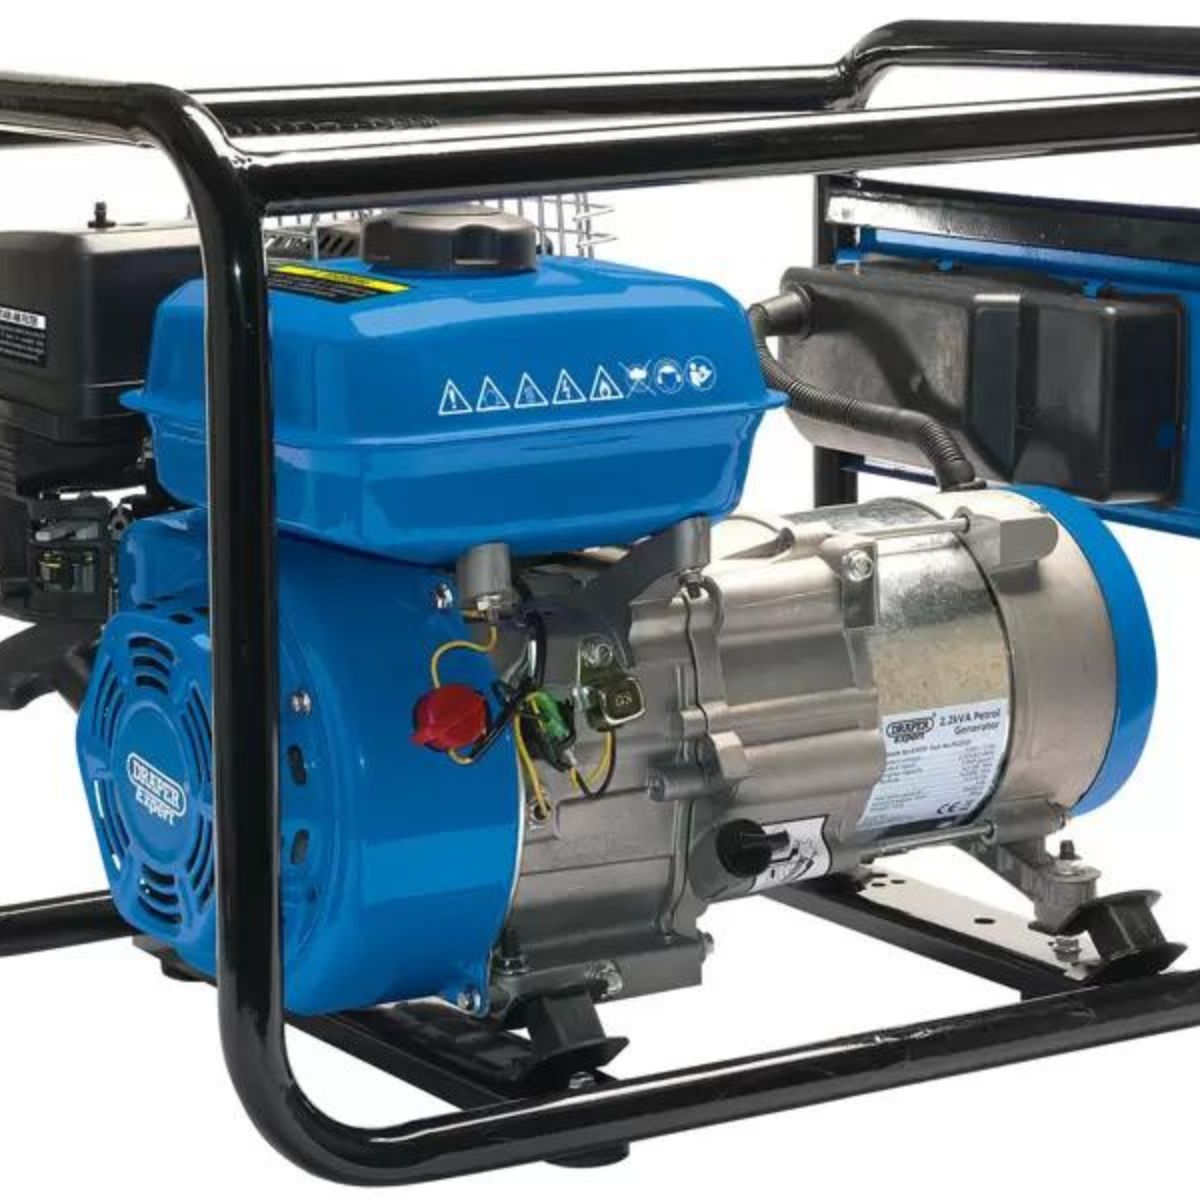 Draper Expert PG252F Petrol Generator 230V/2000W 87059